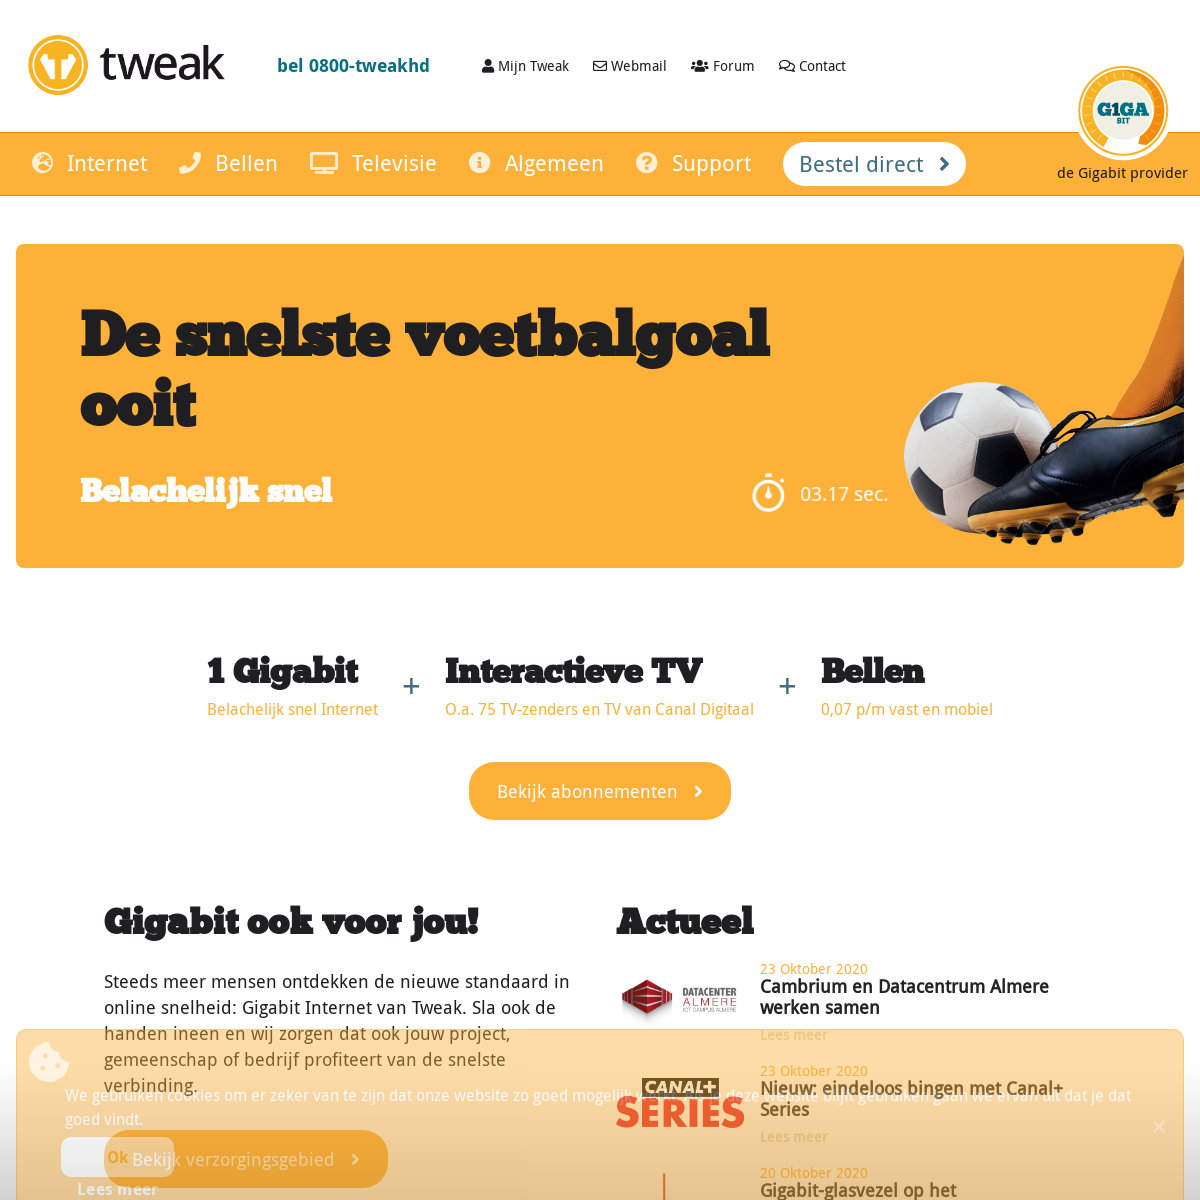 A complete backup of tweak.nl